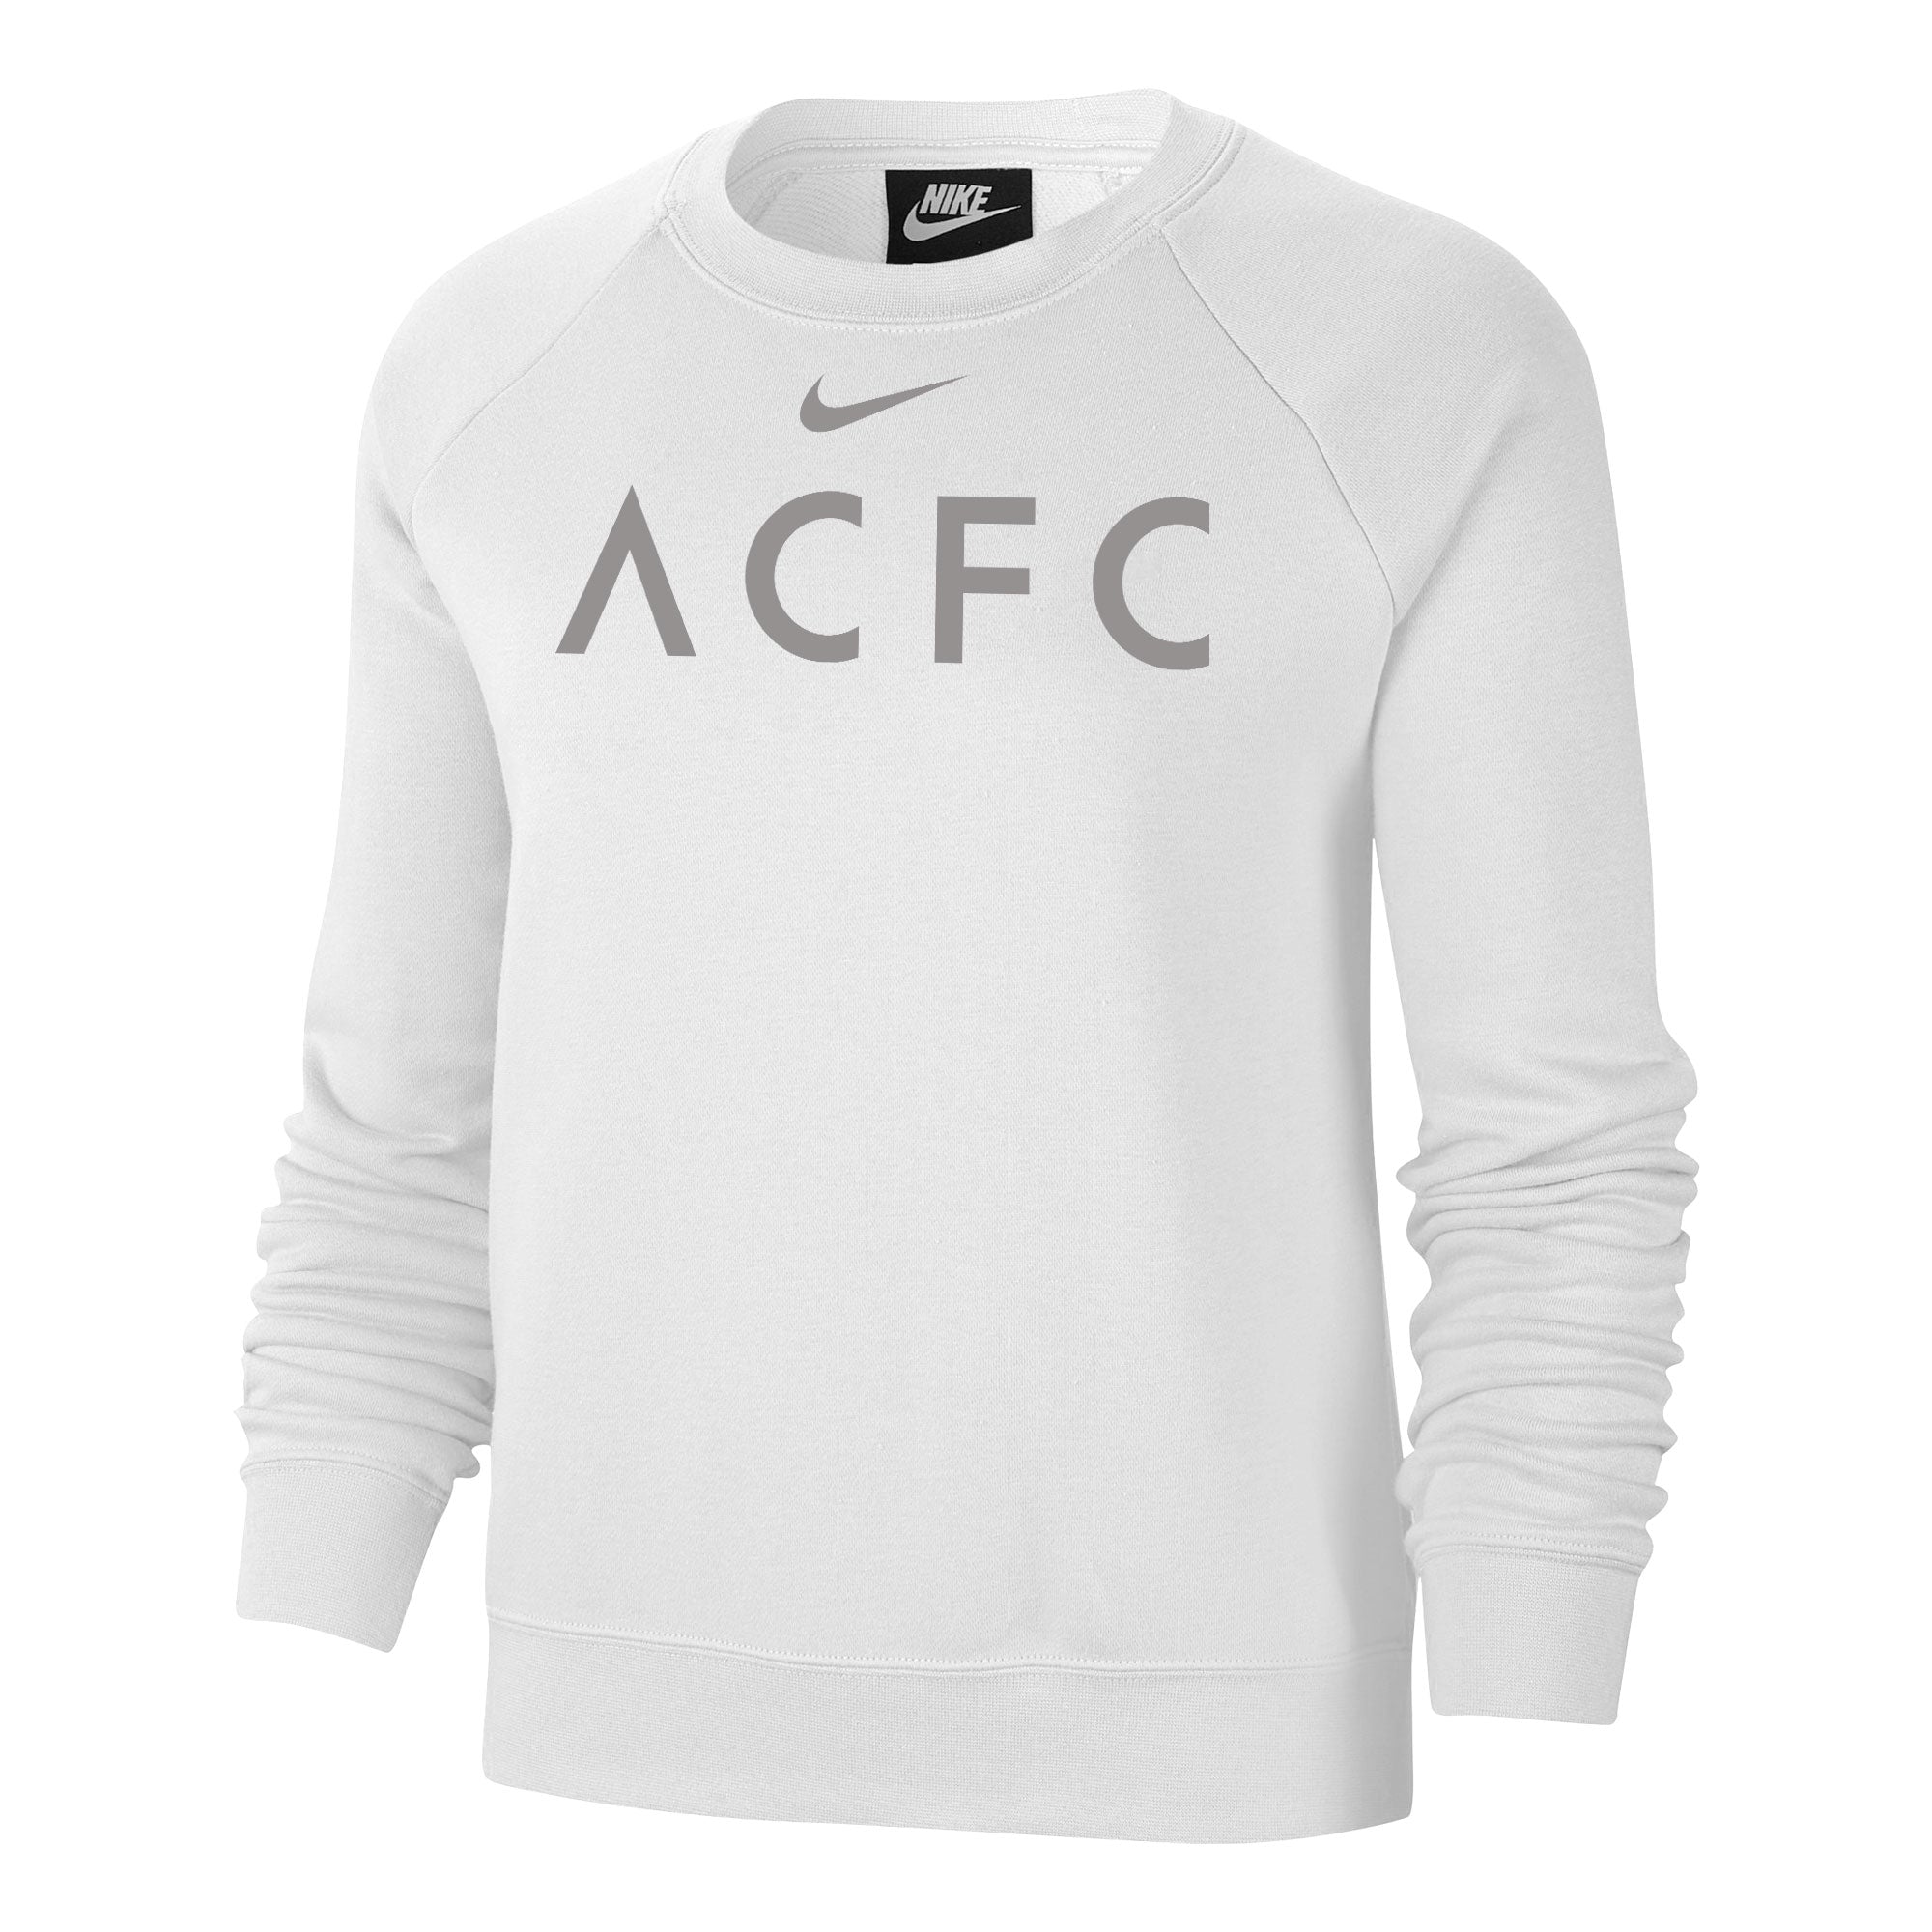 ACFC x Mitchell and Ness Unisex Low Rider Short Sleeve T-Shirt